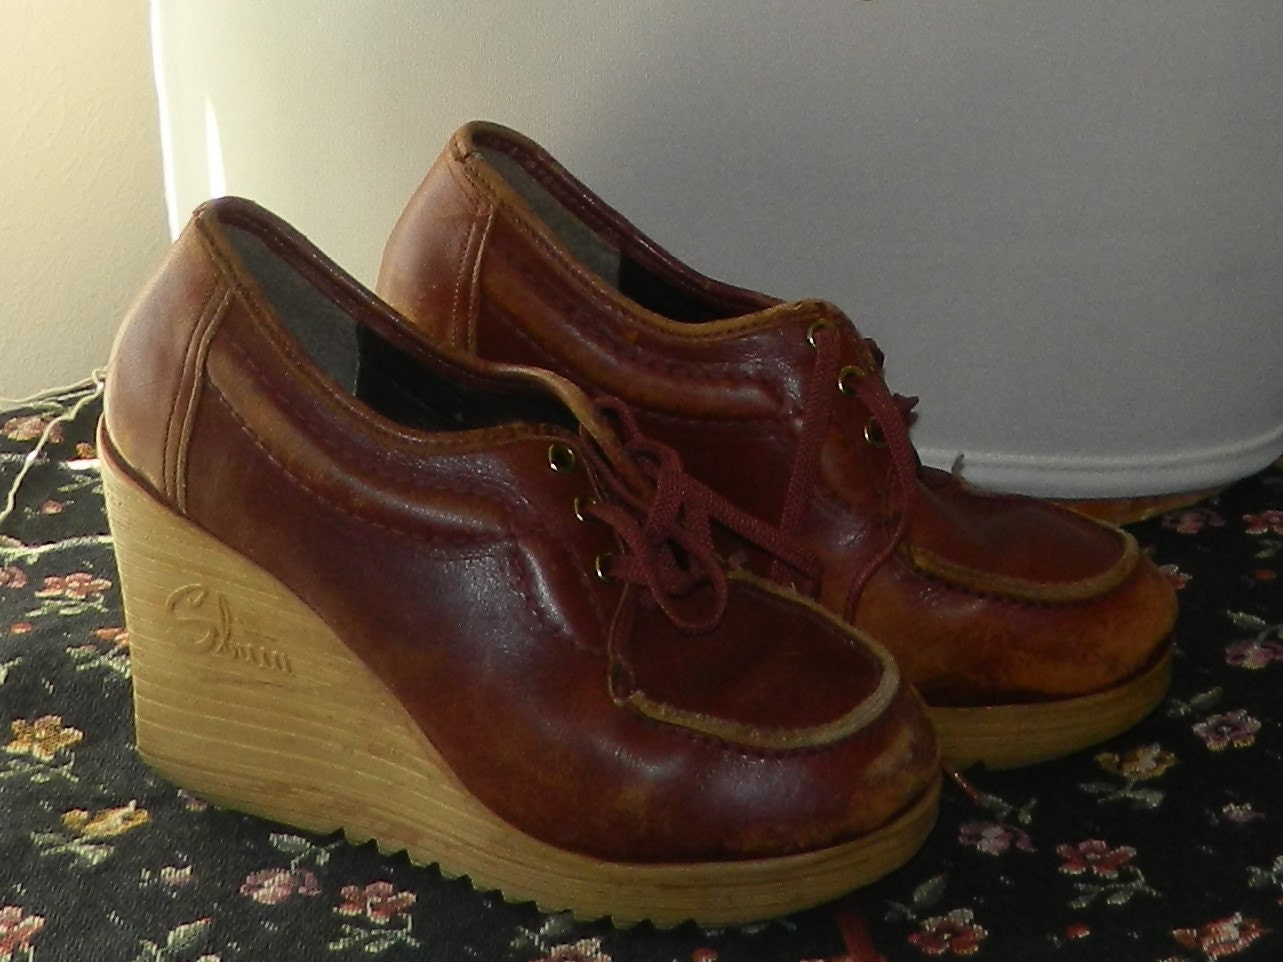 Vintage 1970's Hippie Boho brown leather platform wedges shoes ...